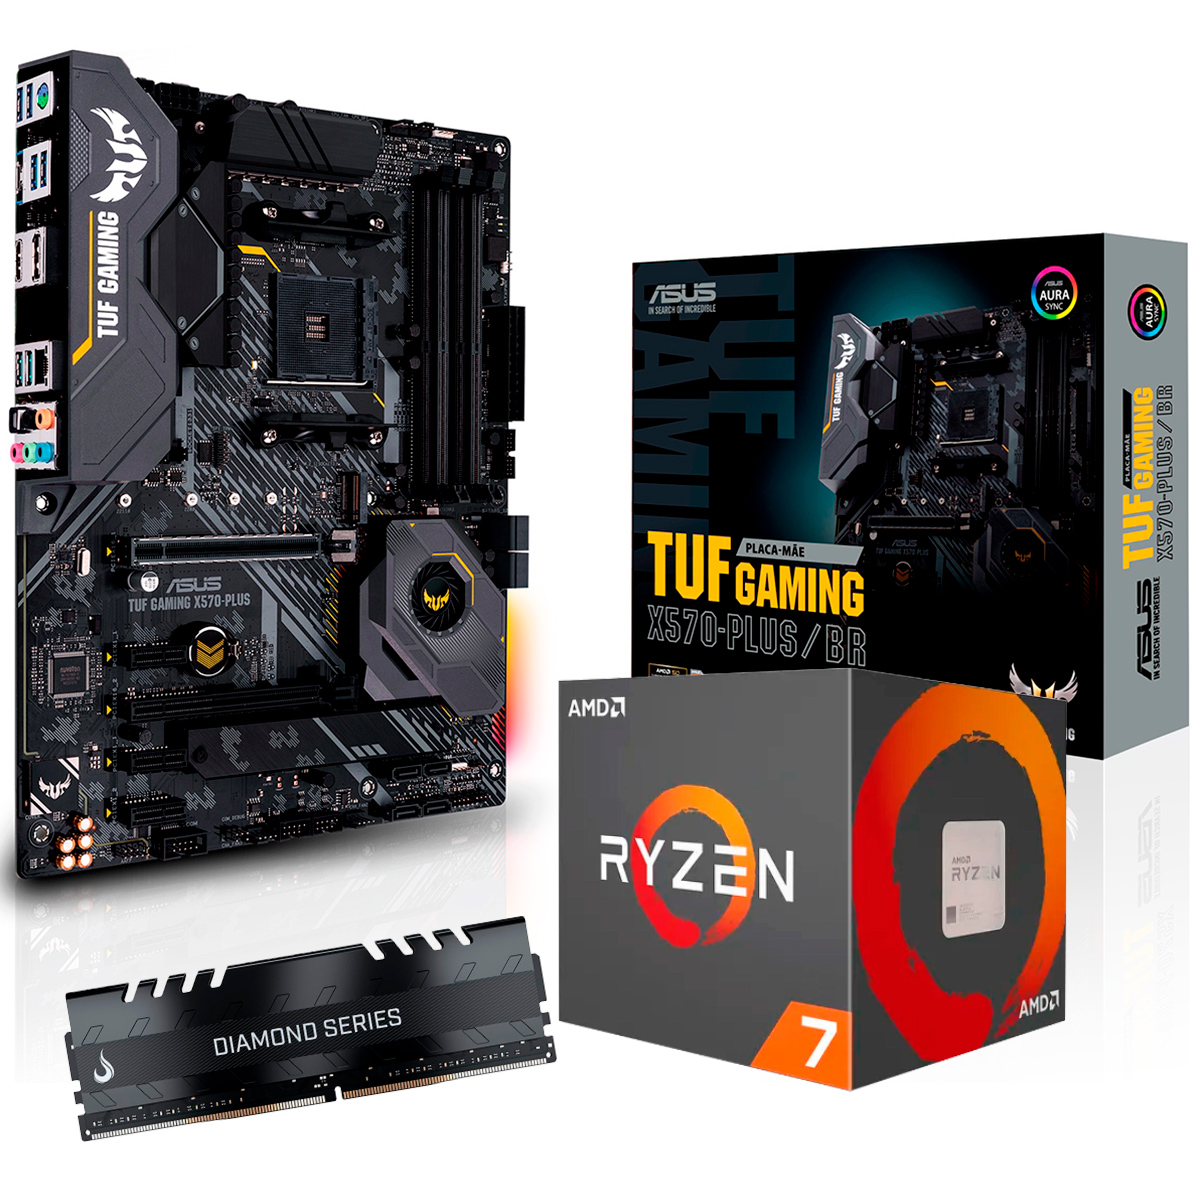 Kit Upgrade AMD Ryzen™ 7 2700 + Asus TUF GAMING X570 PLUS/BR + Memória 8GB DDR4